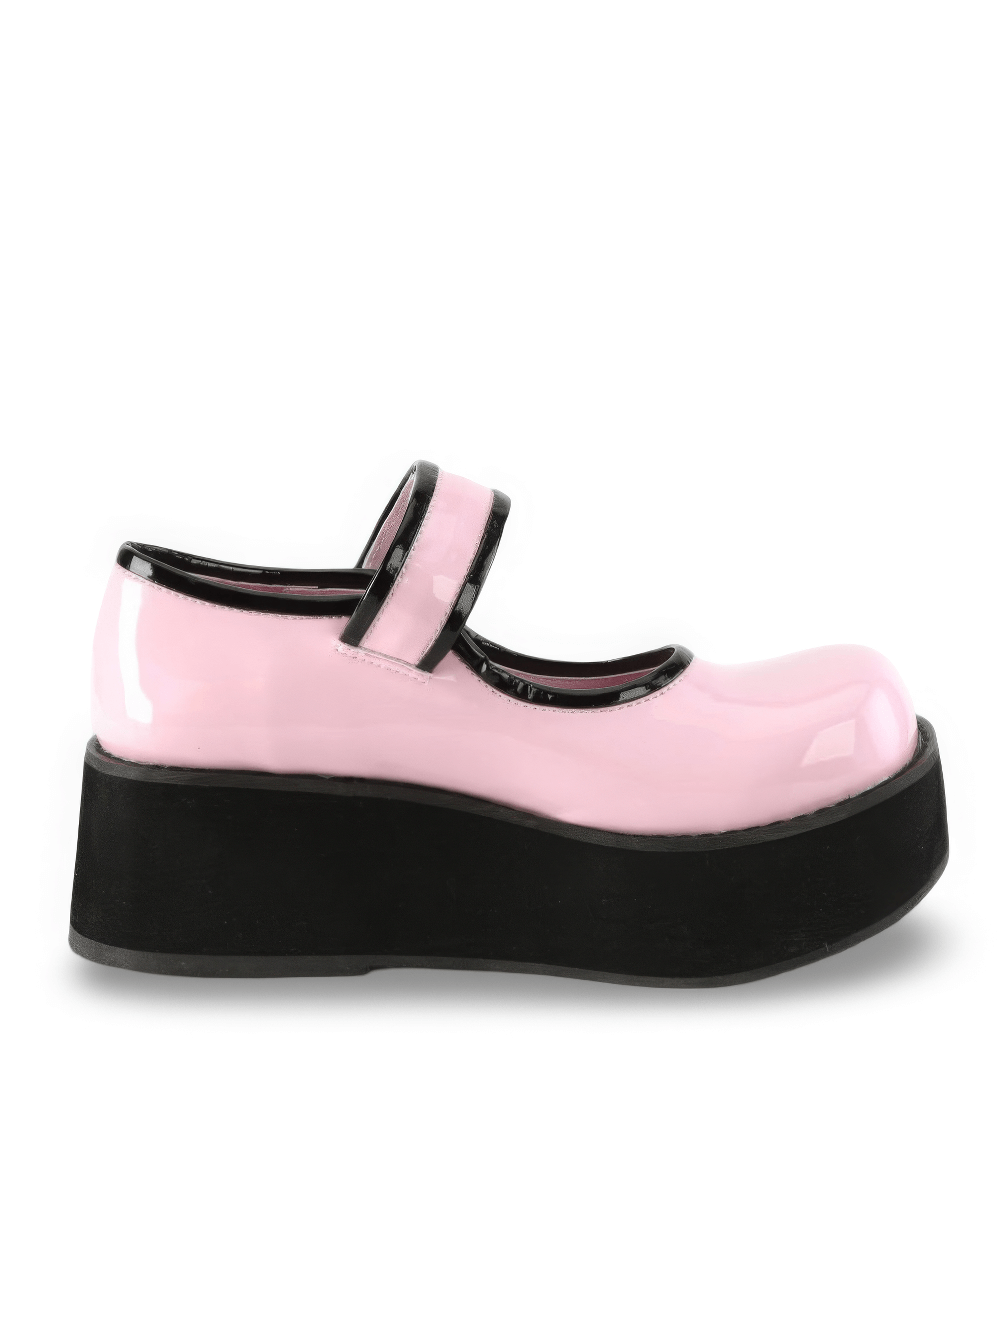 DEMONIA Pink Holographic Mary Jane Platform Shoes